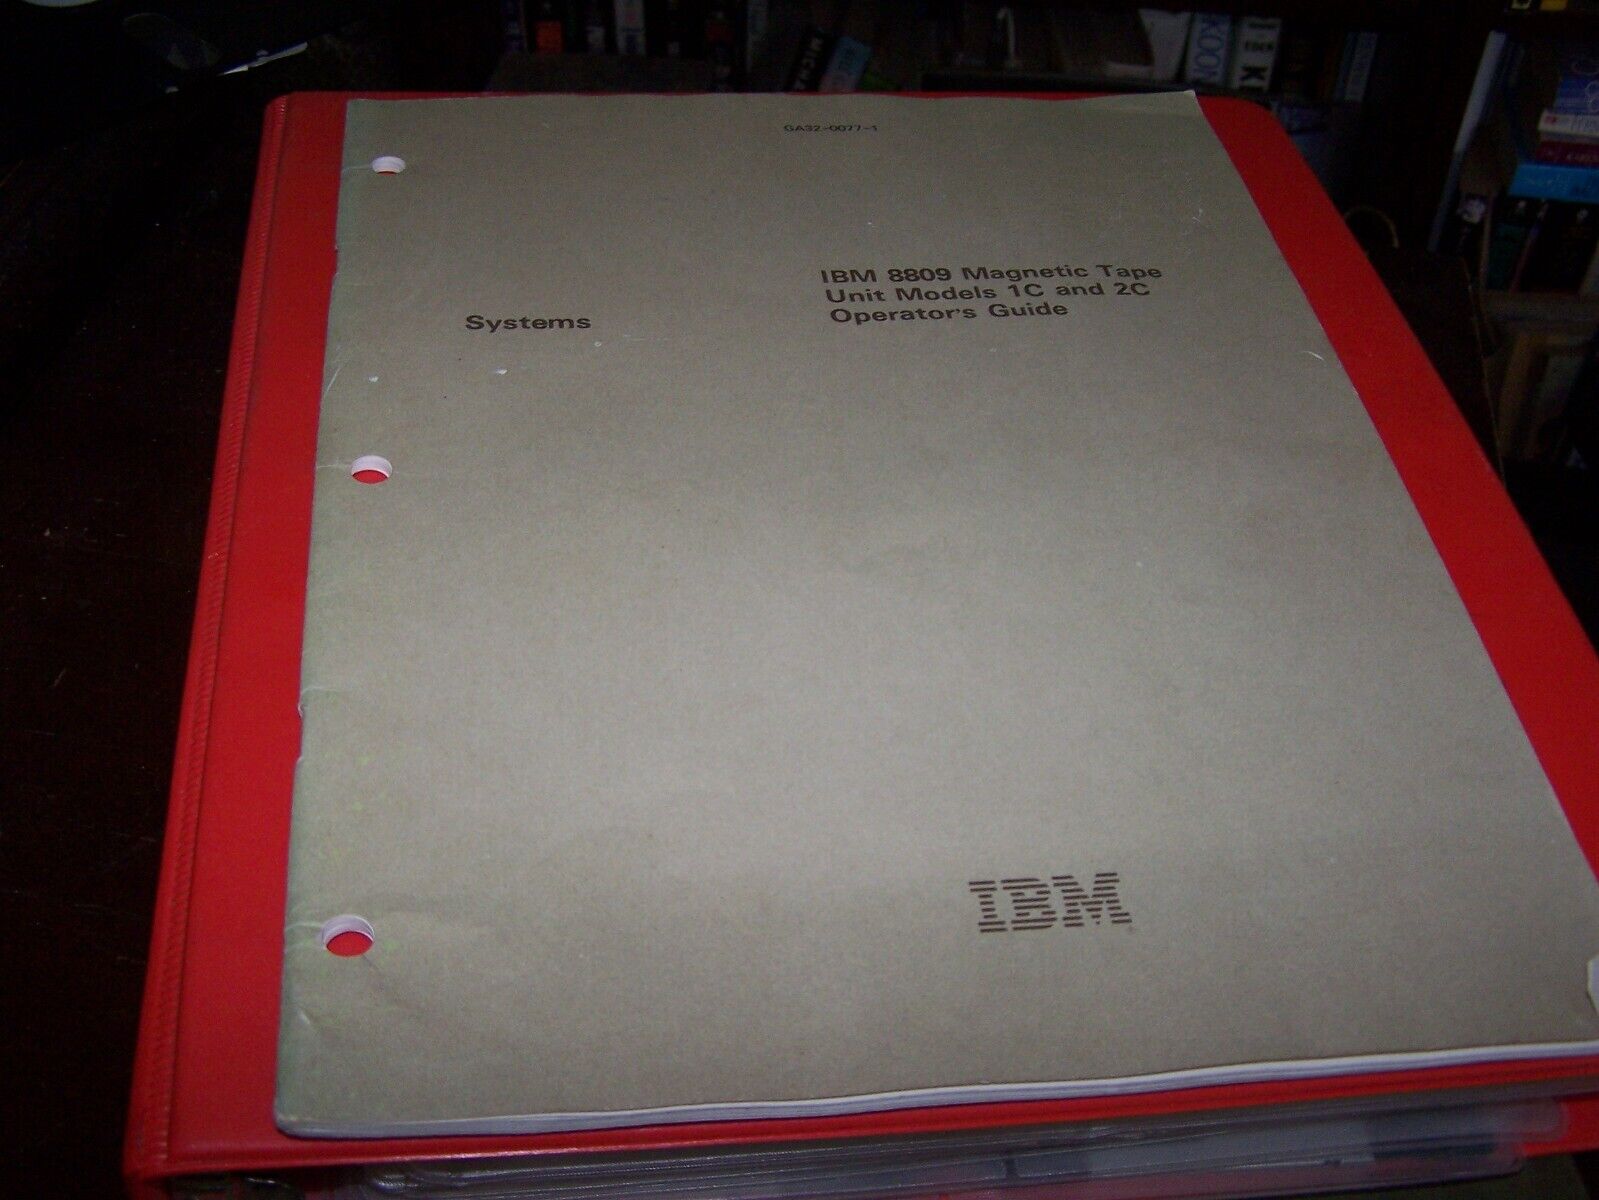 IBM 8809 Magnetic Tape Model 1C and 2C Operator's Guide GA32-0077-1